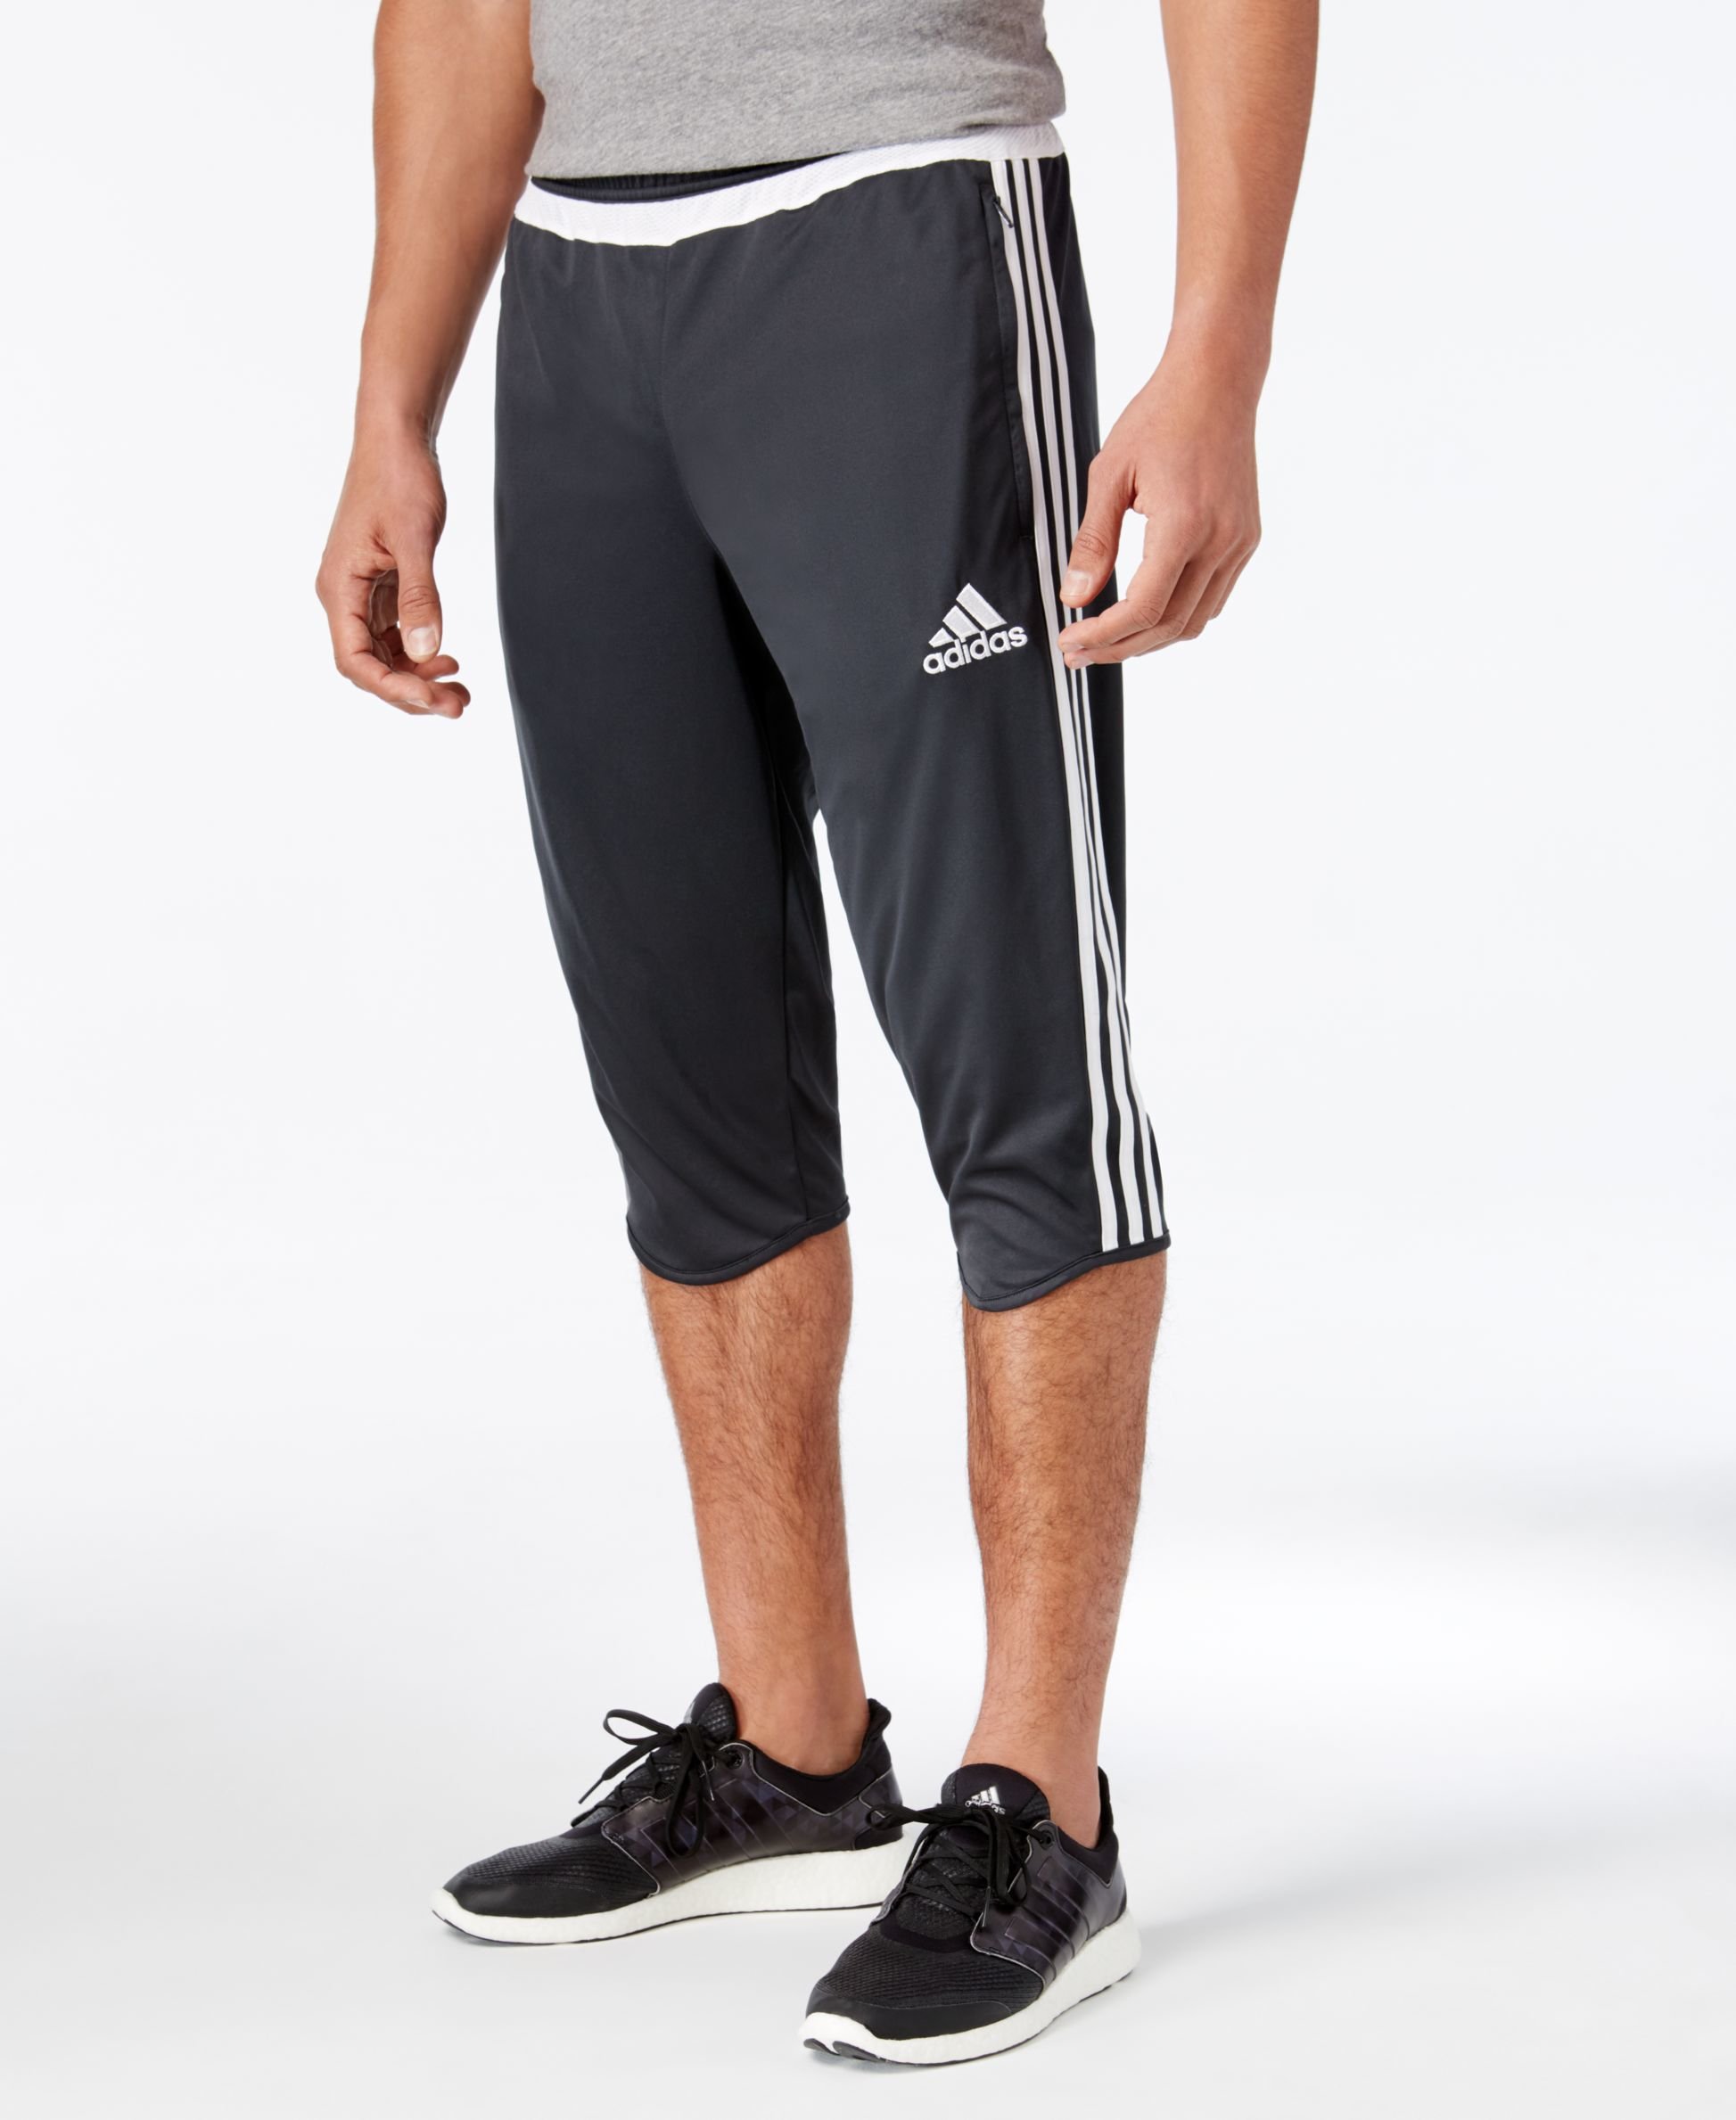 Adidas originals Tiro 15 3/4 Length Climacool Training Pants in Black